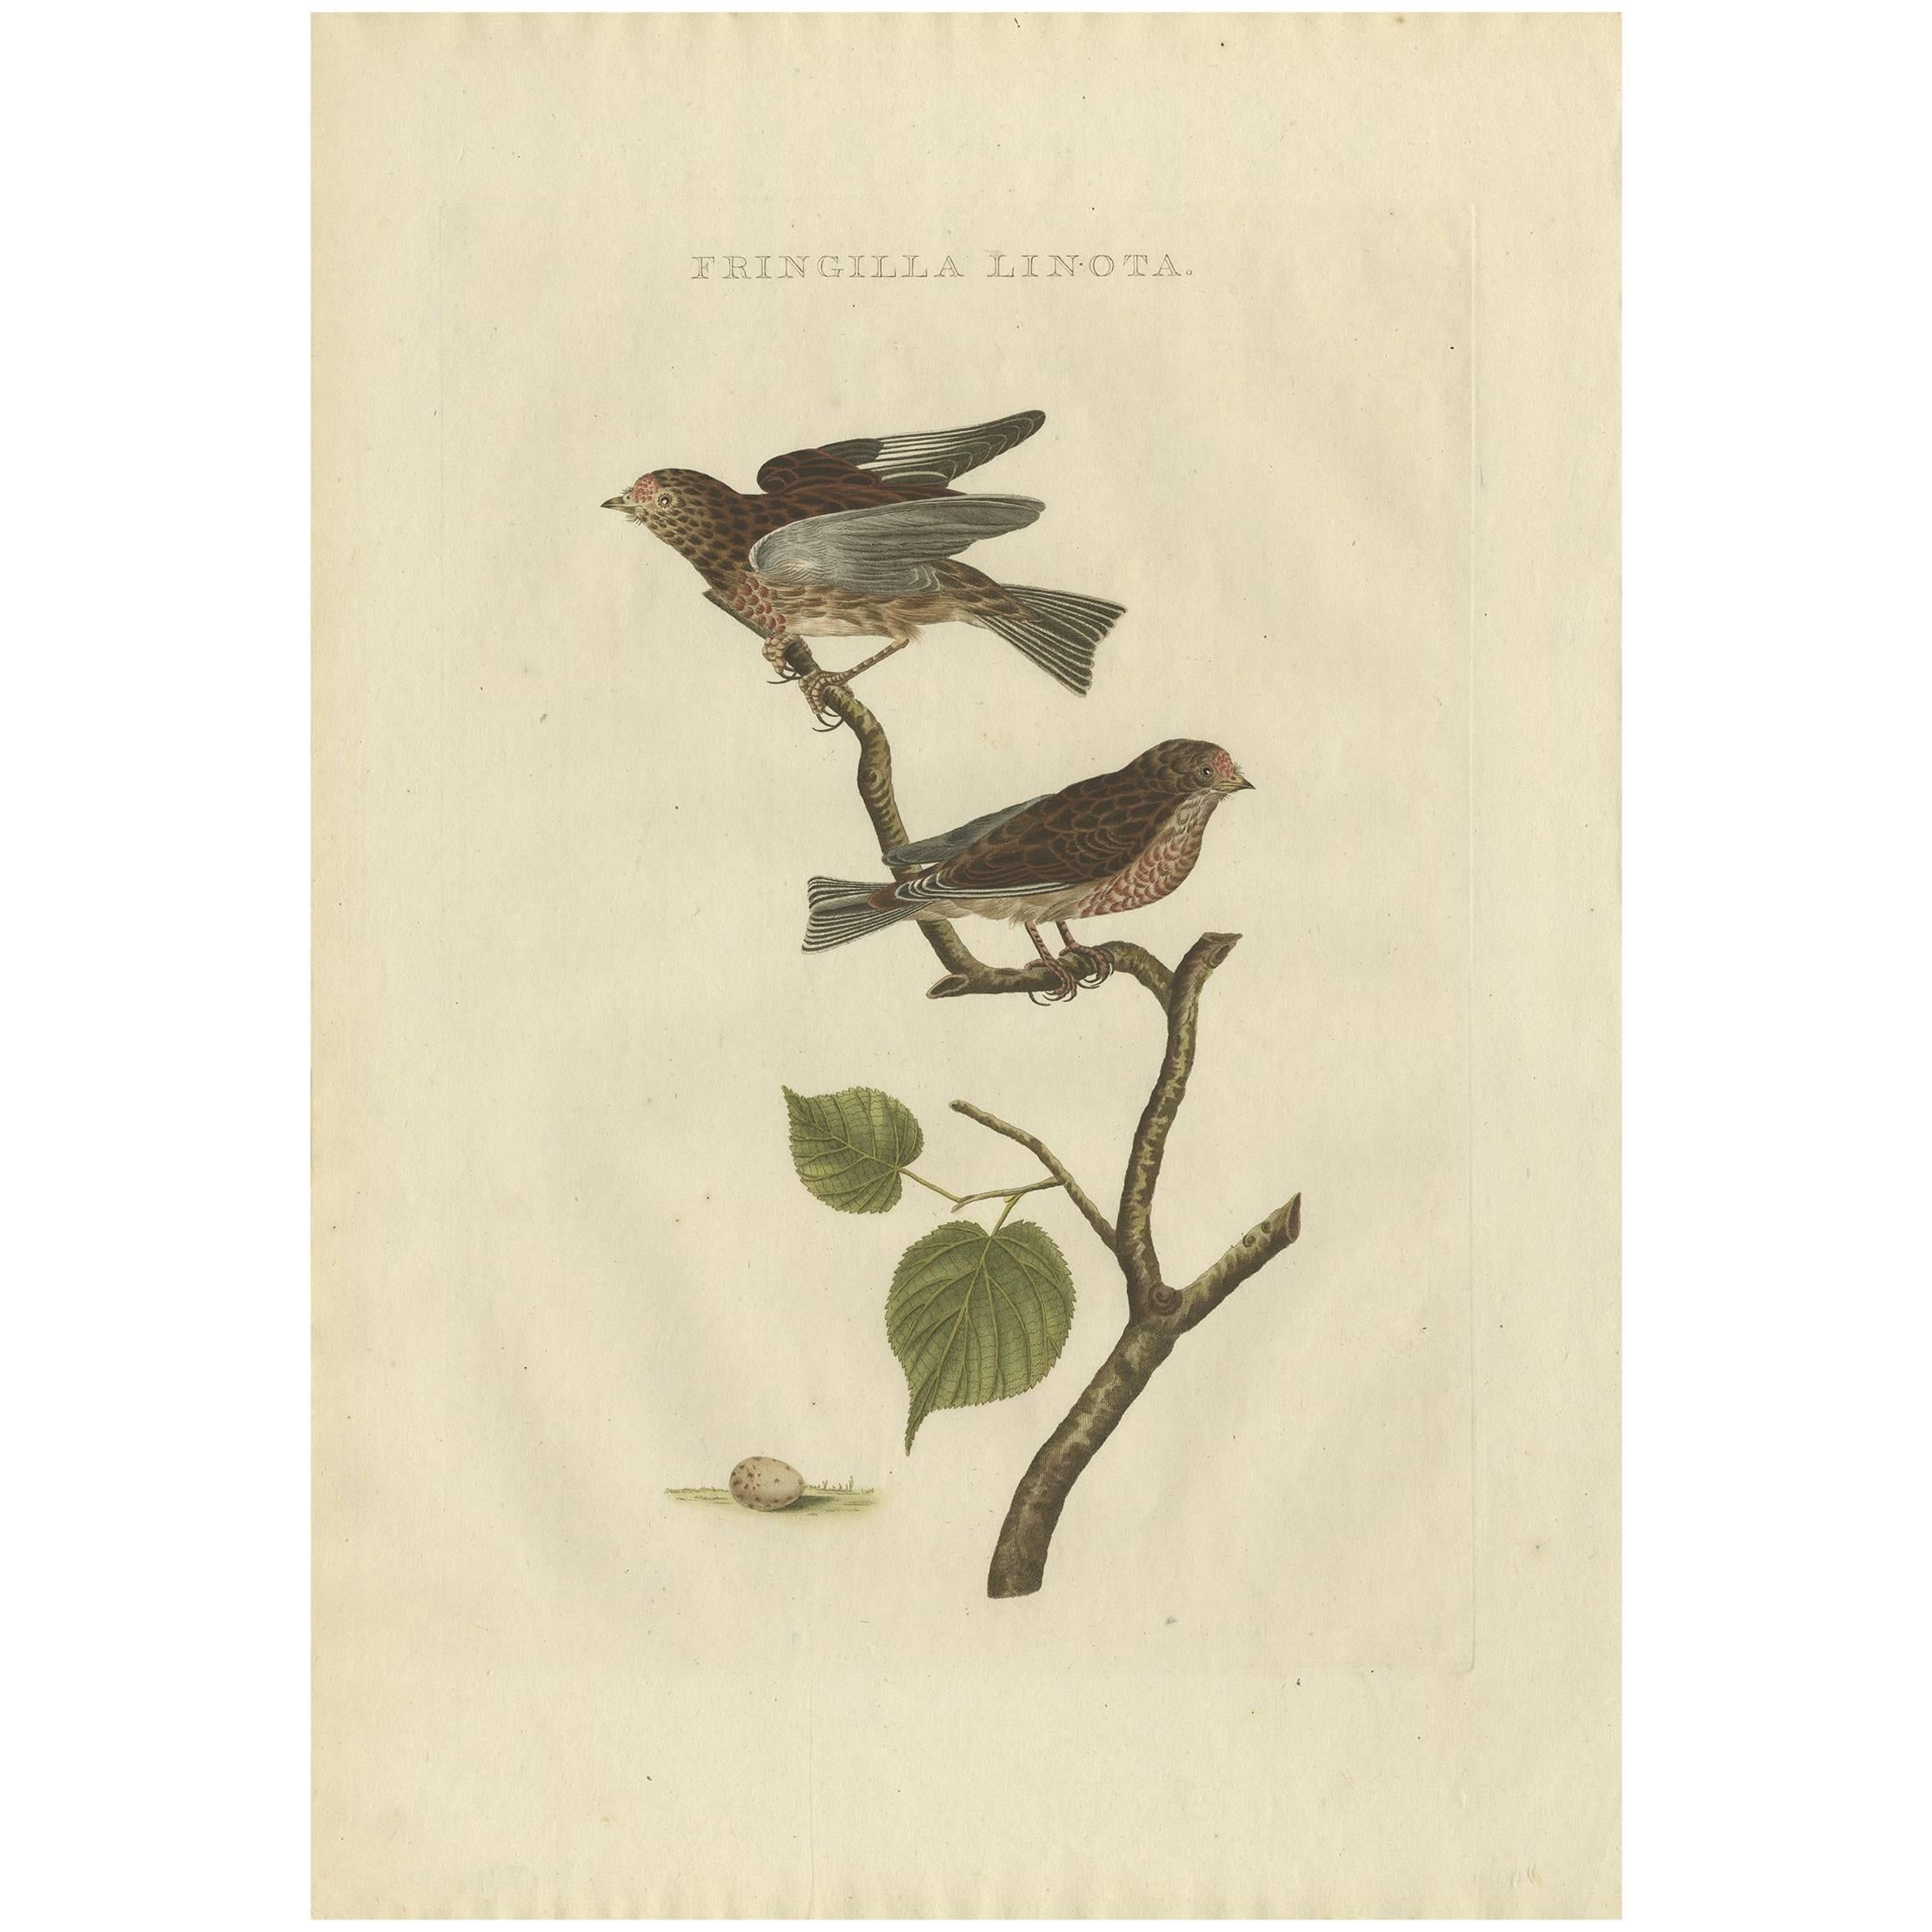 Antique Bird Print of the Common Linnet by Sepp & Nozeman, 1809